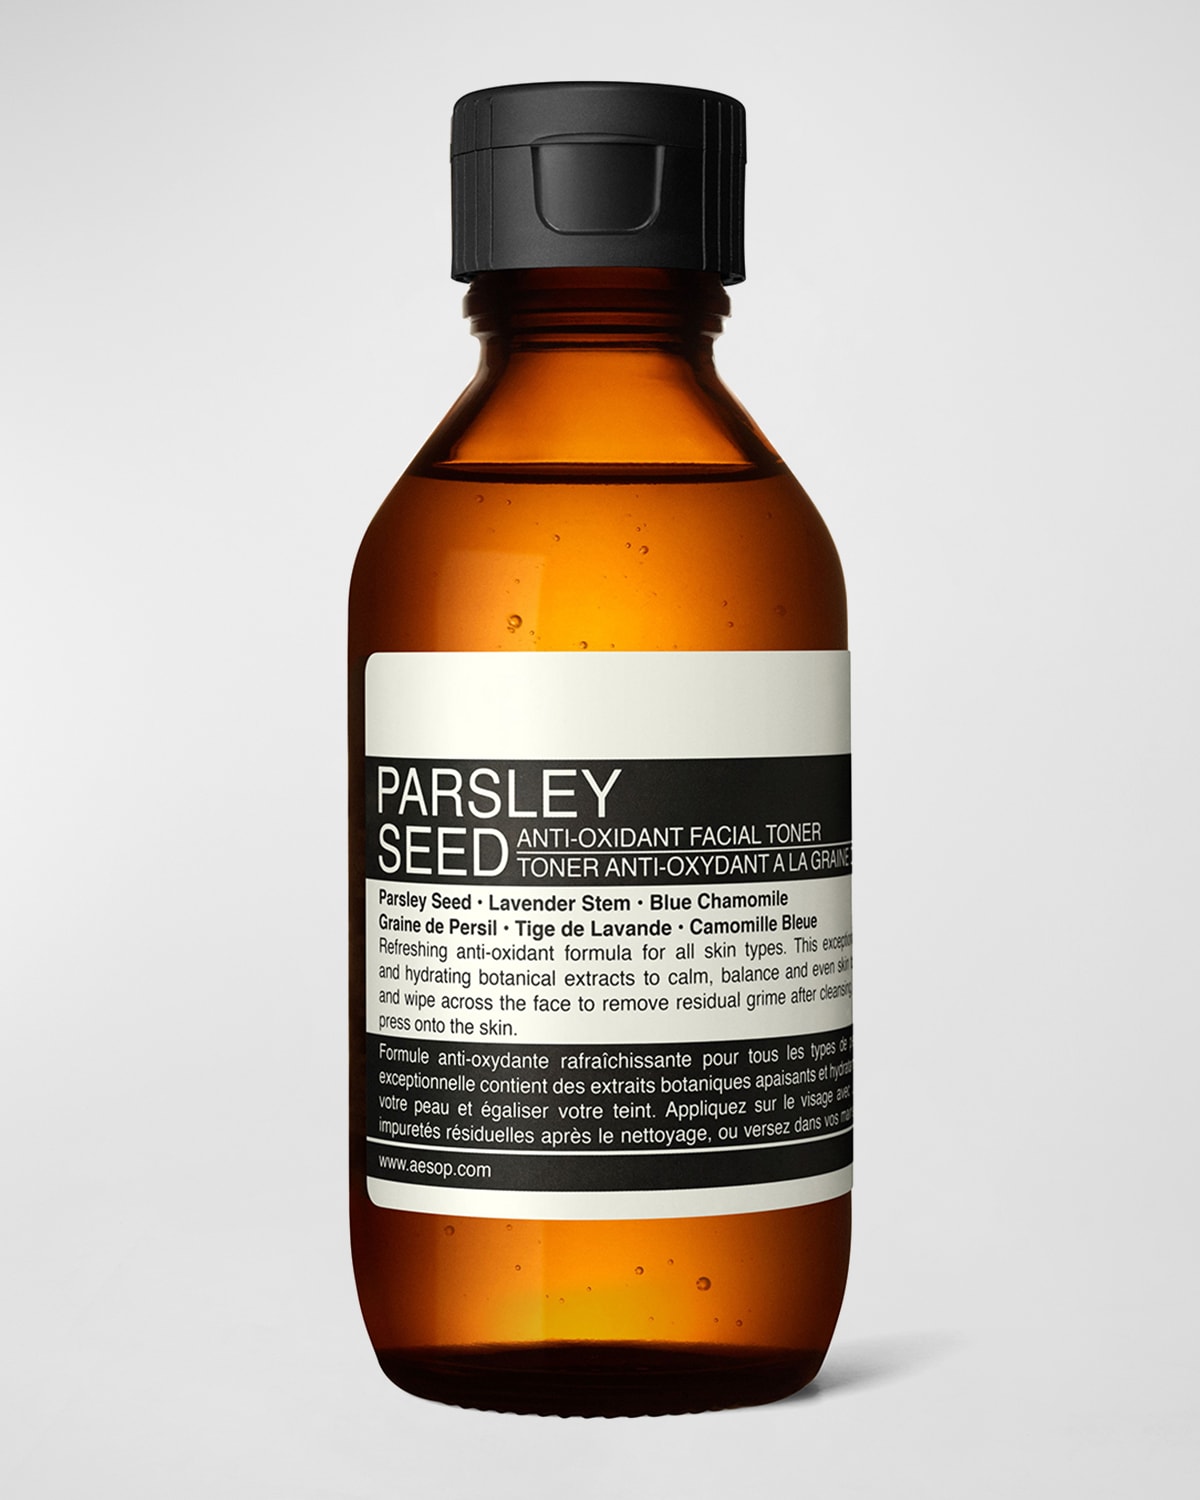 Parsley Seed Anti-Oxidant Facial Toner, 3.4 oz.